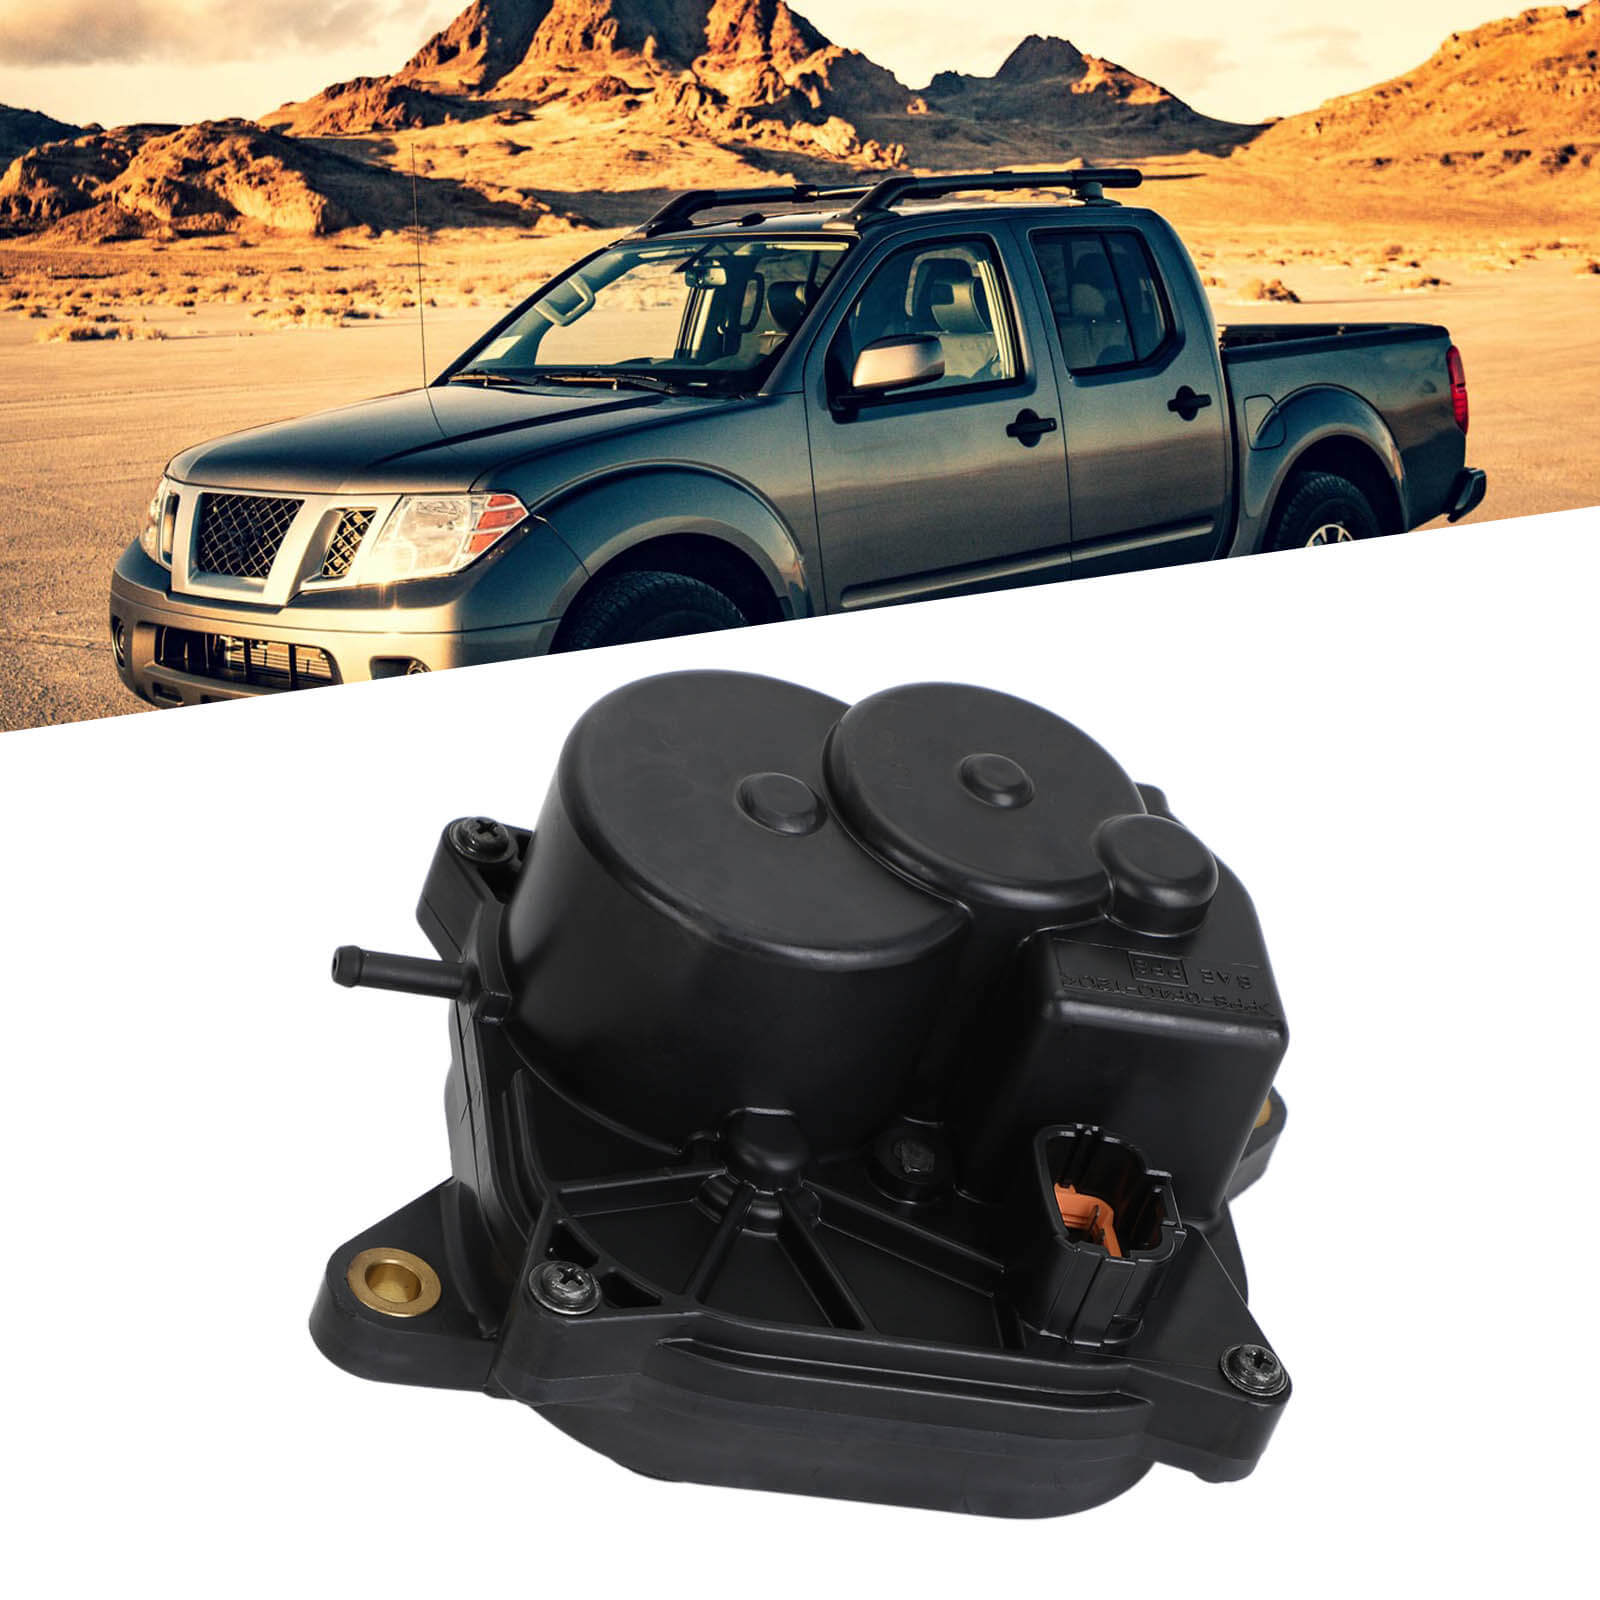 4WD Transfer Case Shift Motor For Nissan Frontier 2005-2017 V6 4.0L Petrol Automatic Trans Titan 2004-2015 V8 5.6L Petrol